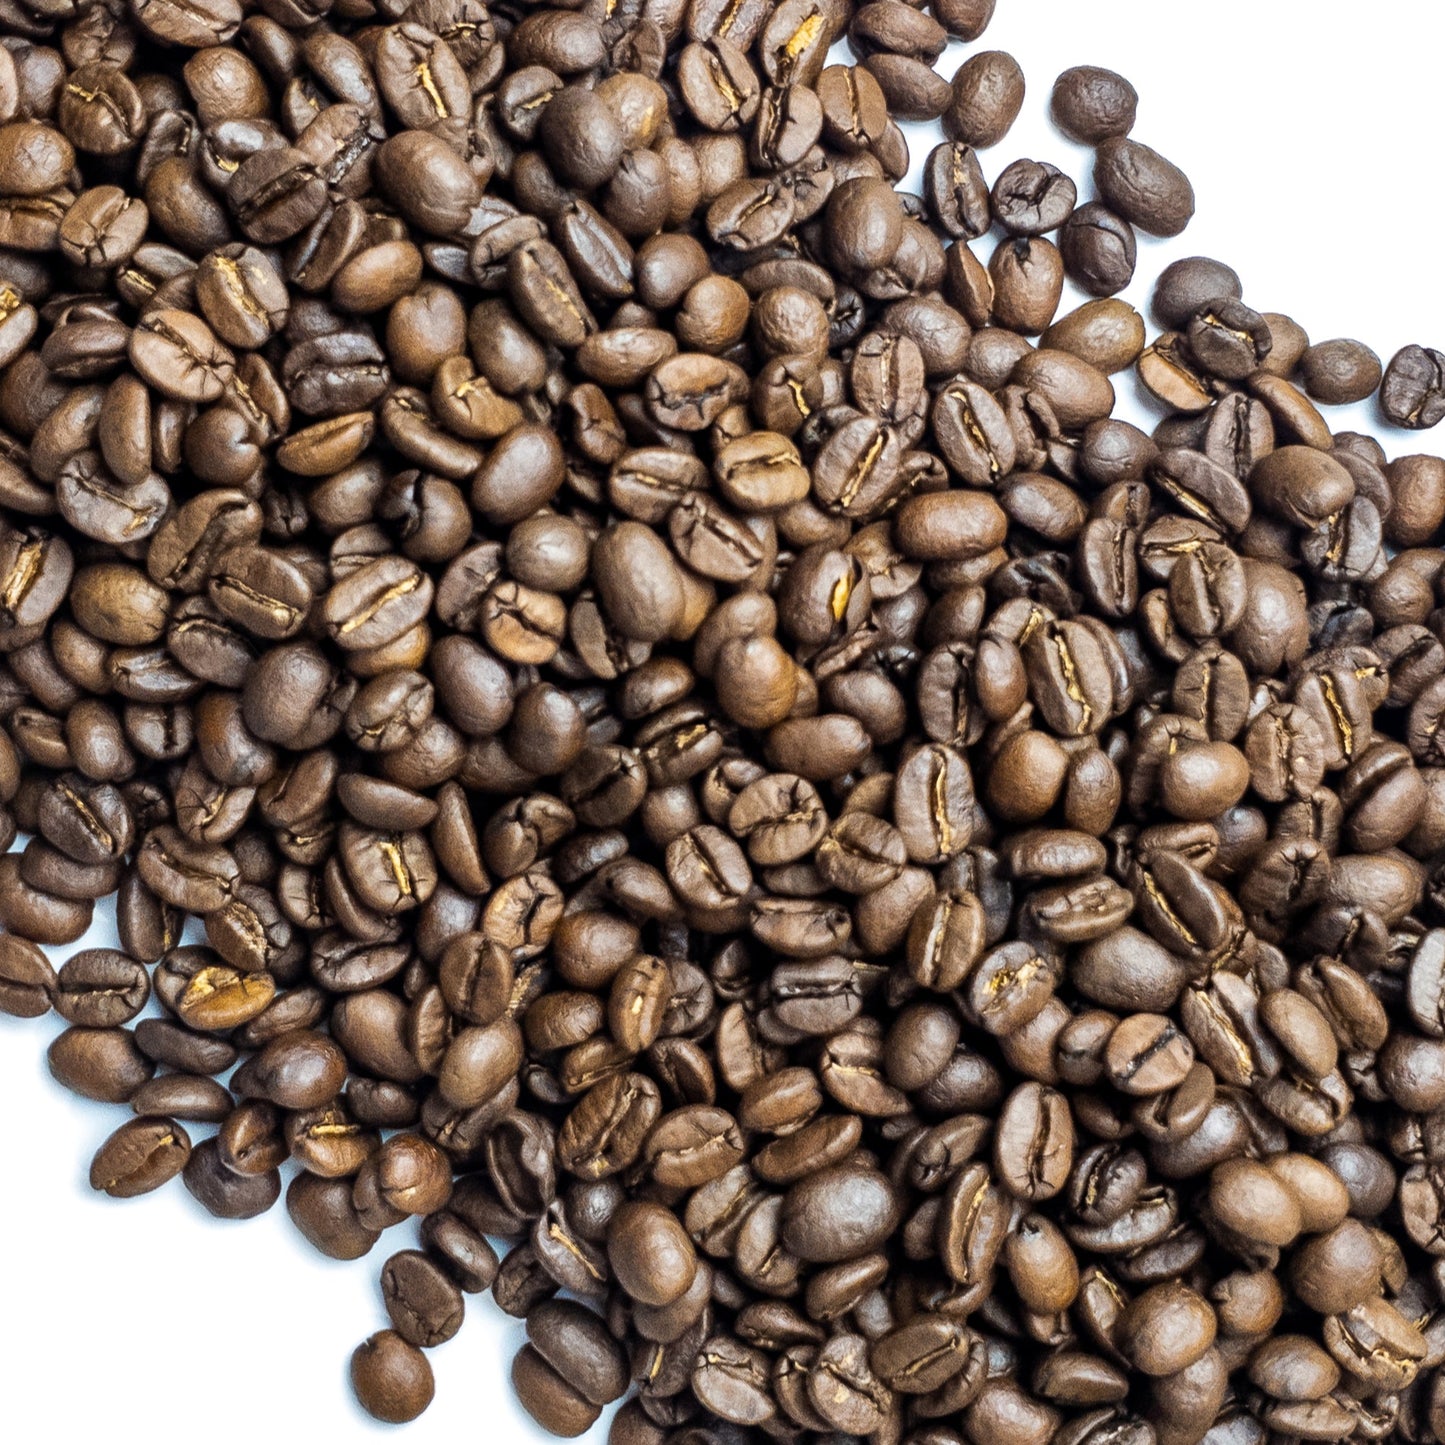 
                  
                    Black Velvet | Whole Bean Coffee | Dark "French" Roast | Rose Rock Coffee | Air Roasted | 10oz | 12oz | 1lb | 5lb | Sample
                  
                